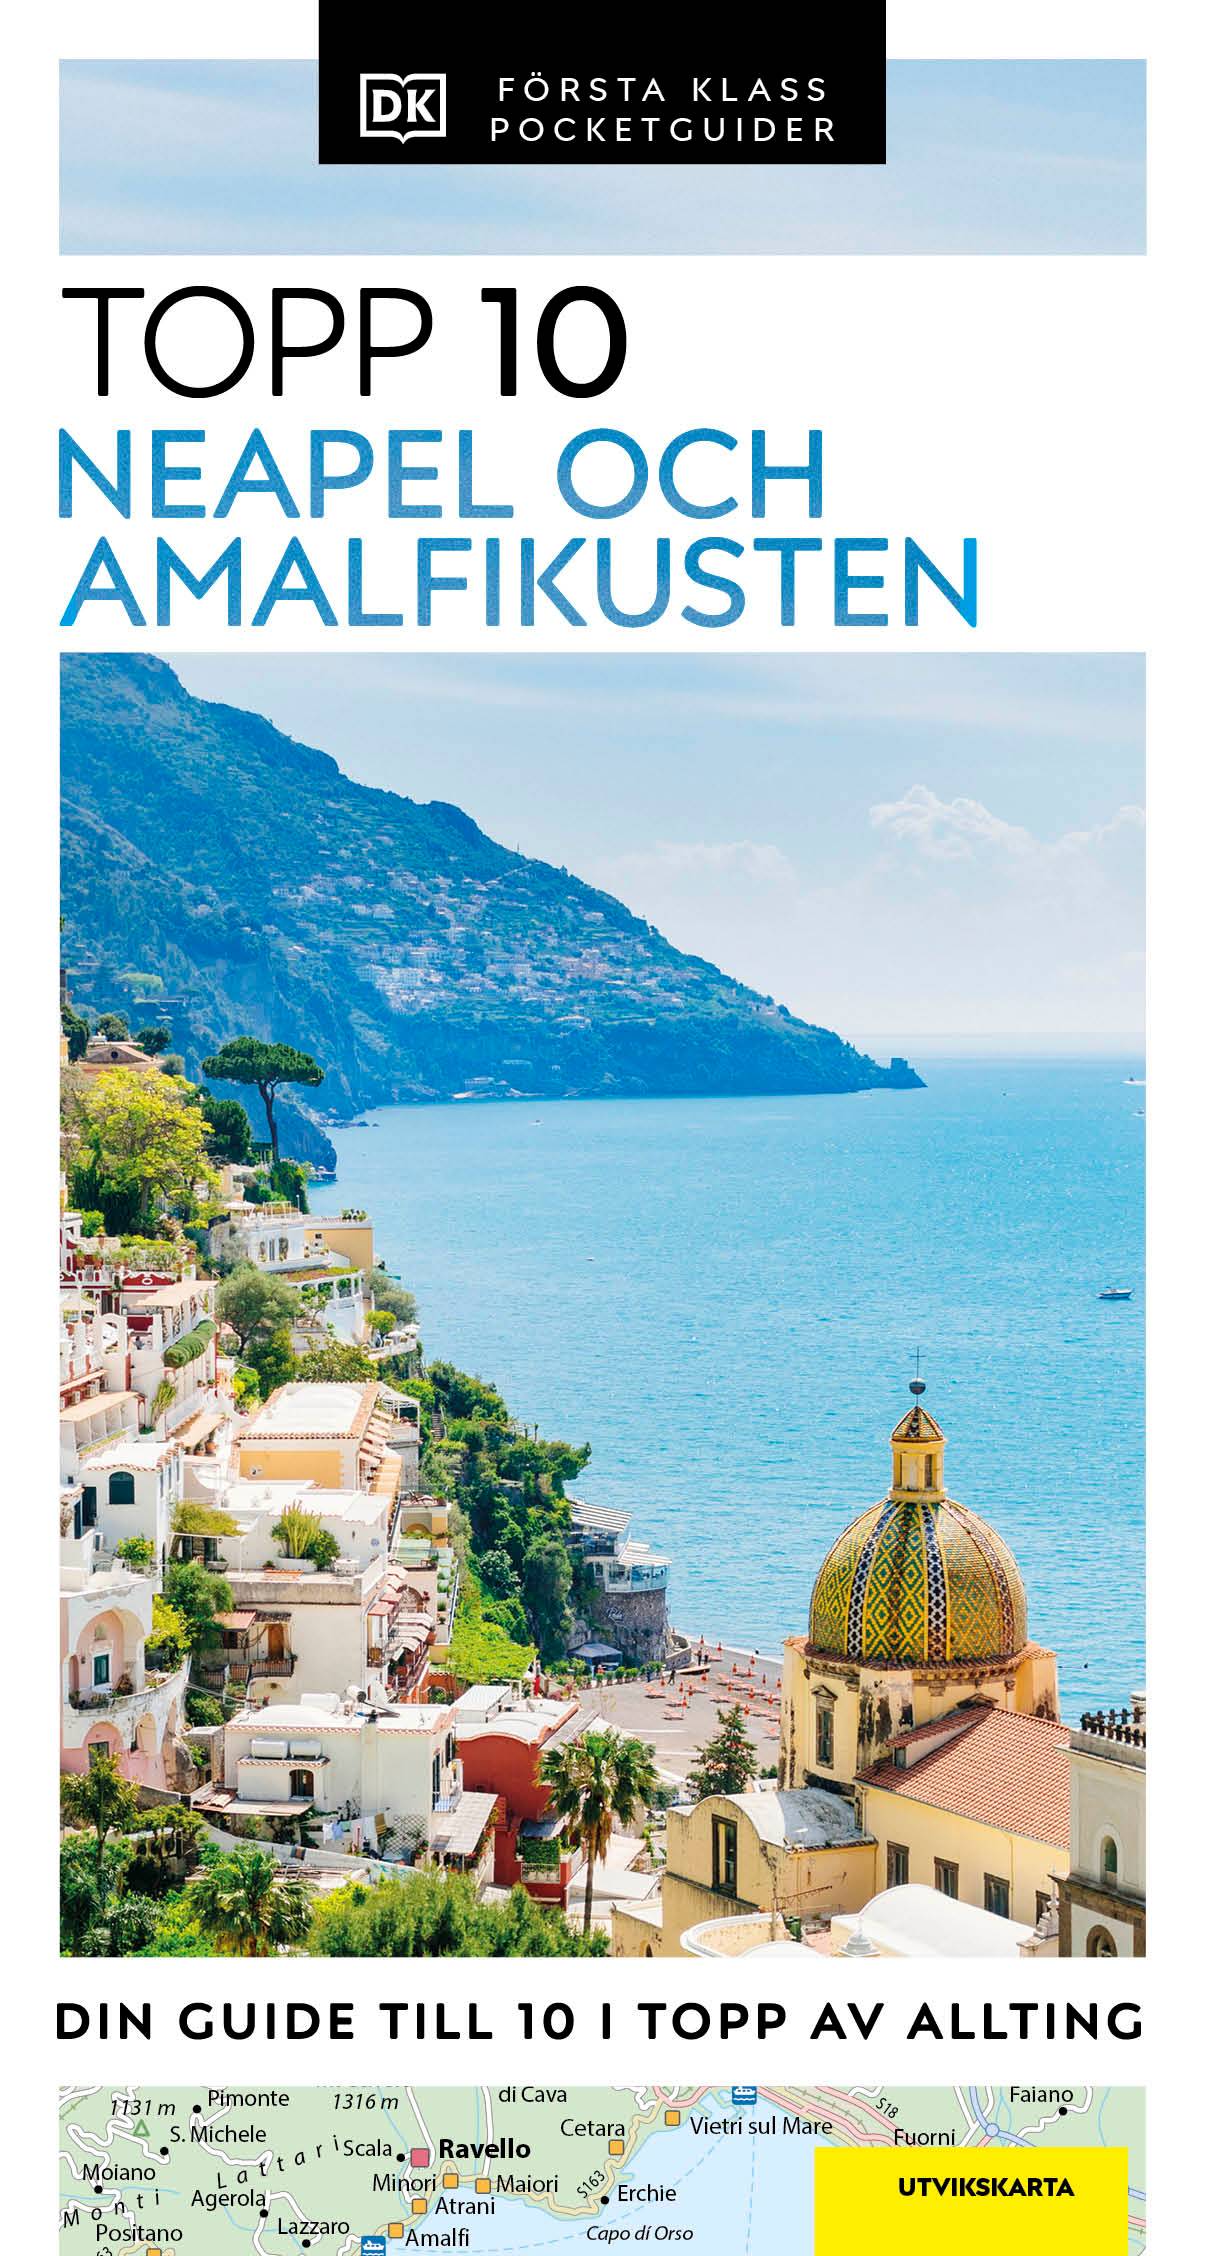 Neapel och Amalfikusten : Topp 10